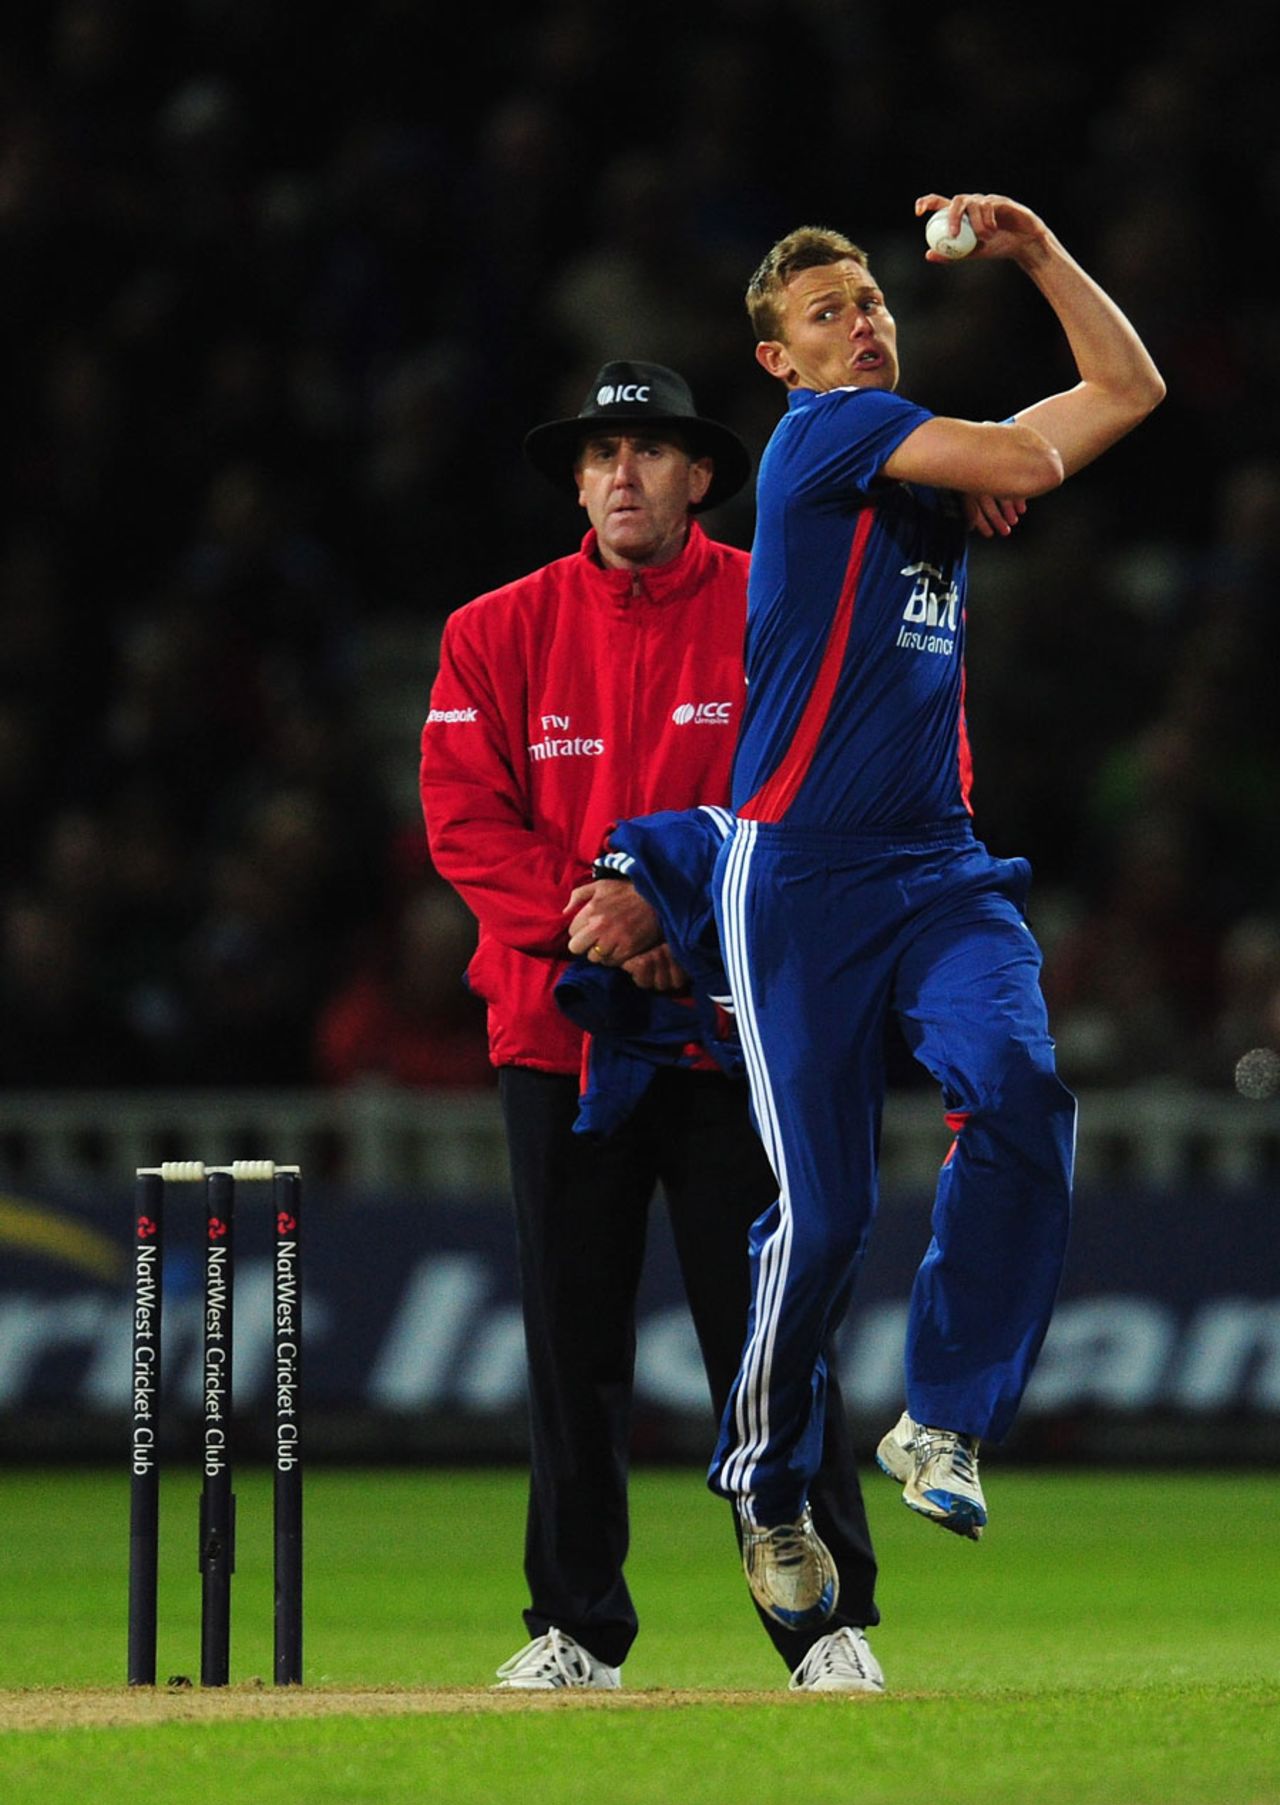 Danny Briggs made his T20 international debut, England v South Africa, 3rd T20 international, Edgbaston, September 12, 2012